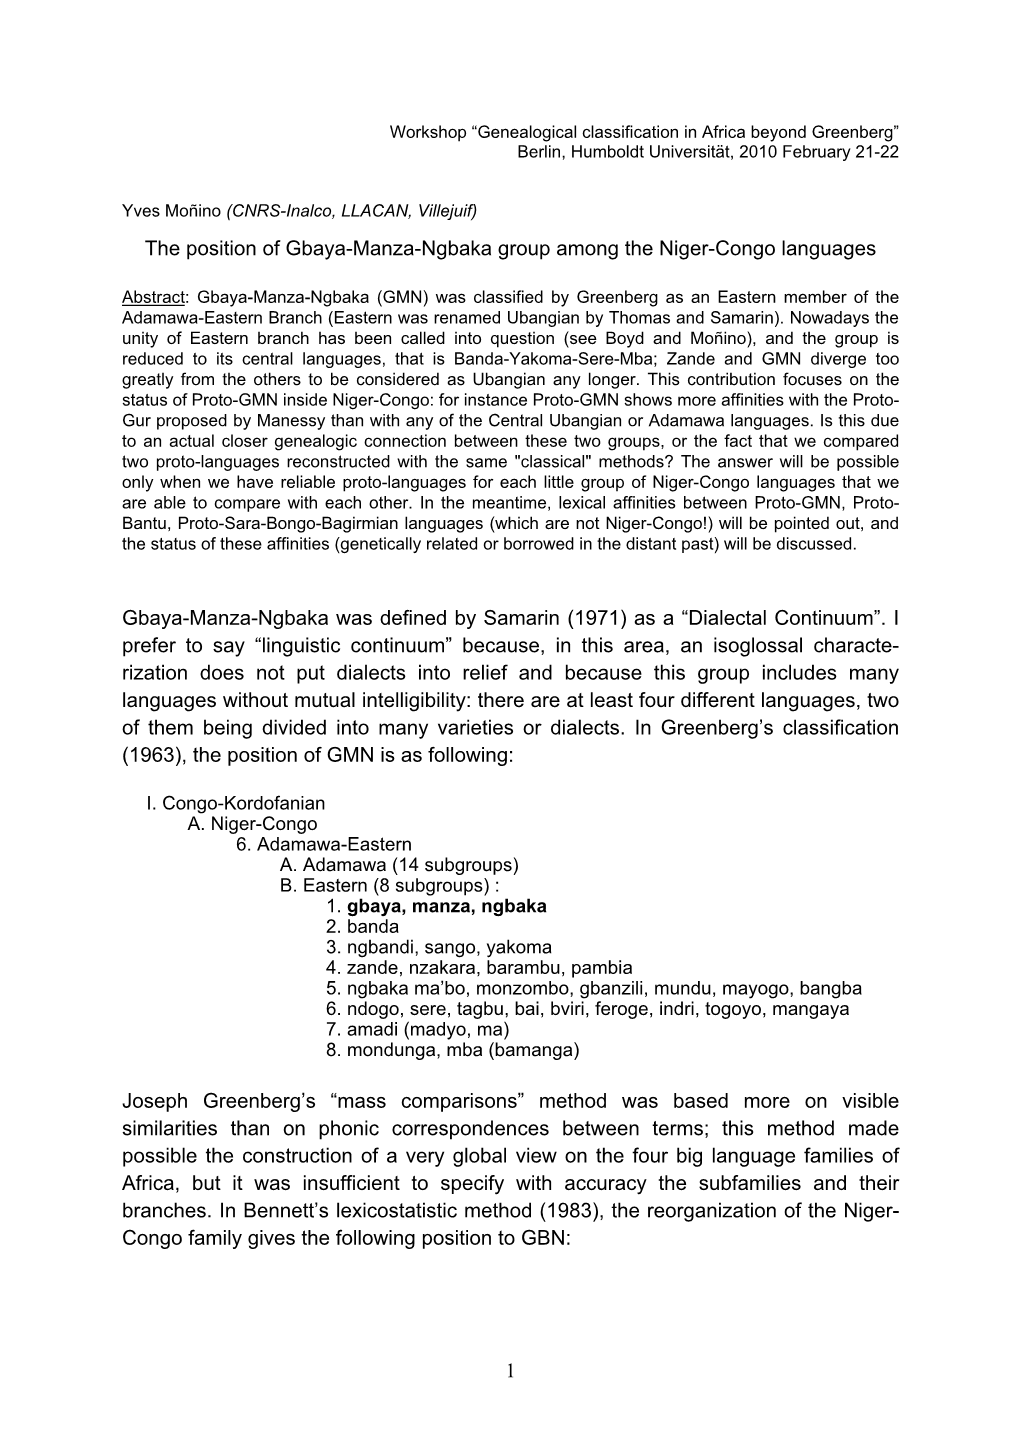 The Position of Gbaya-Manza-Ngbaka Group Among the Niger-Congo Languages